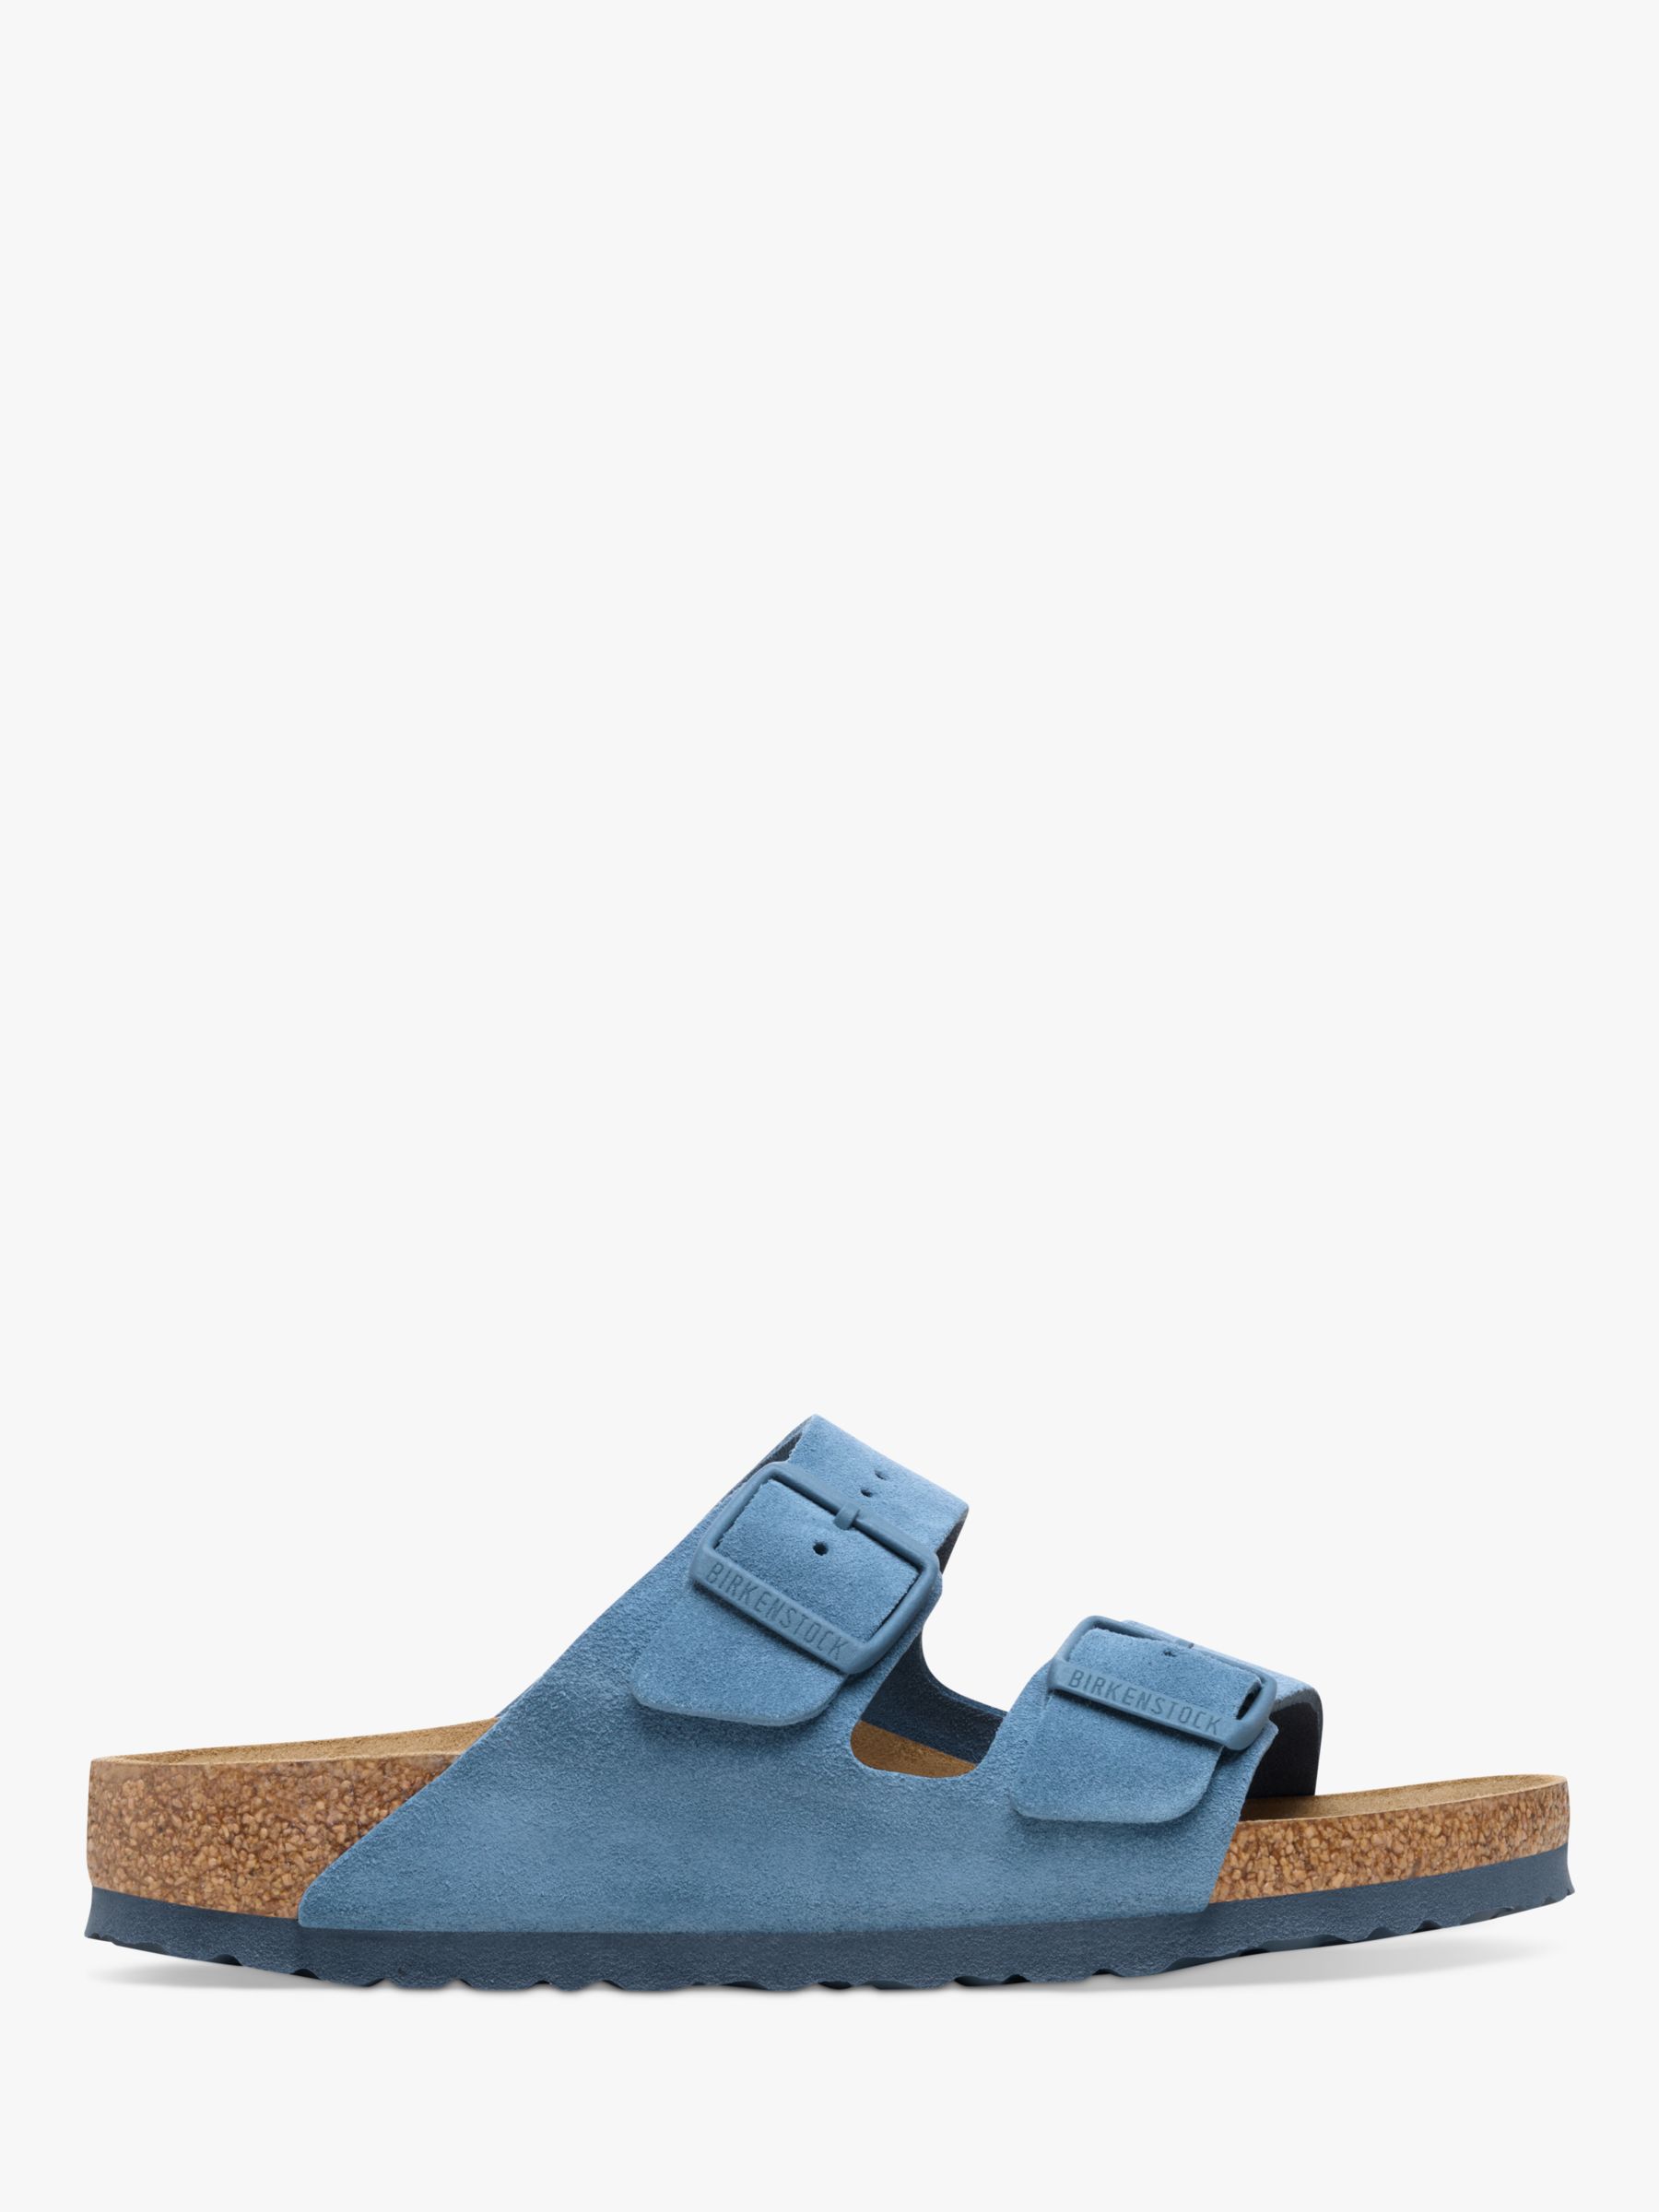 Birkenstock Arizona Suede Sandals, Elemental Blue, 39